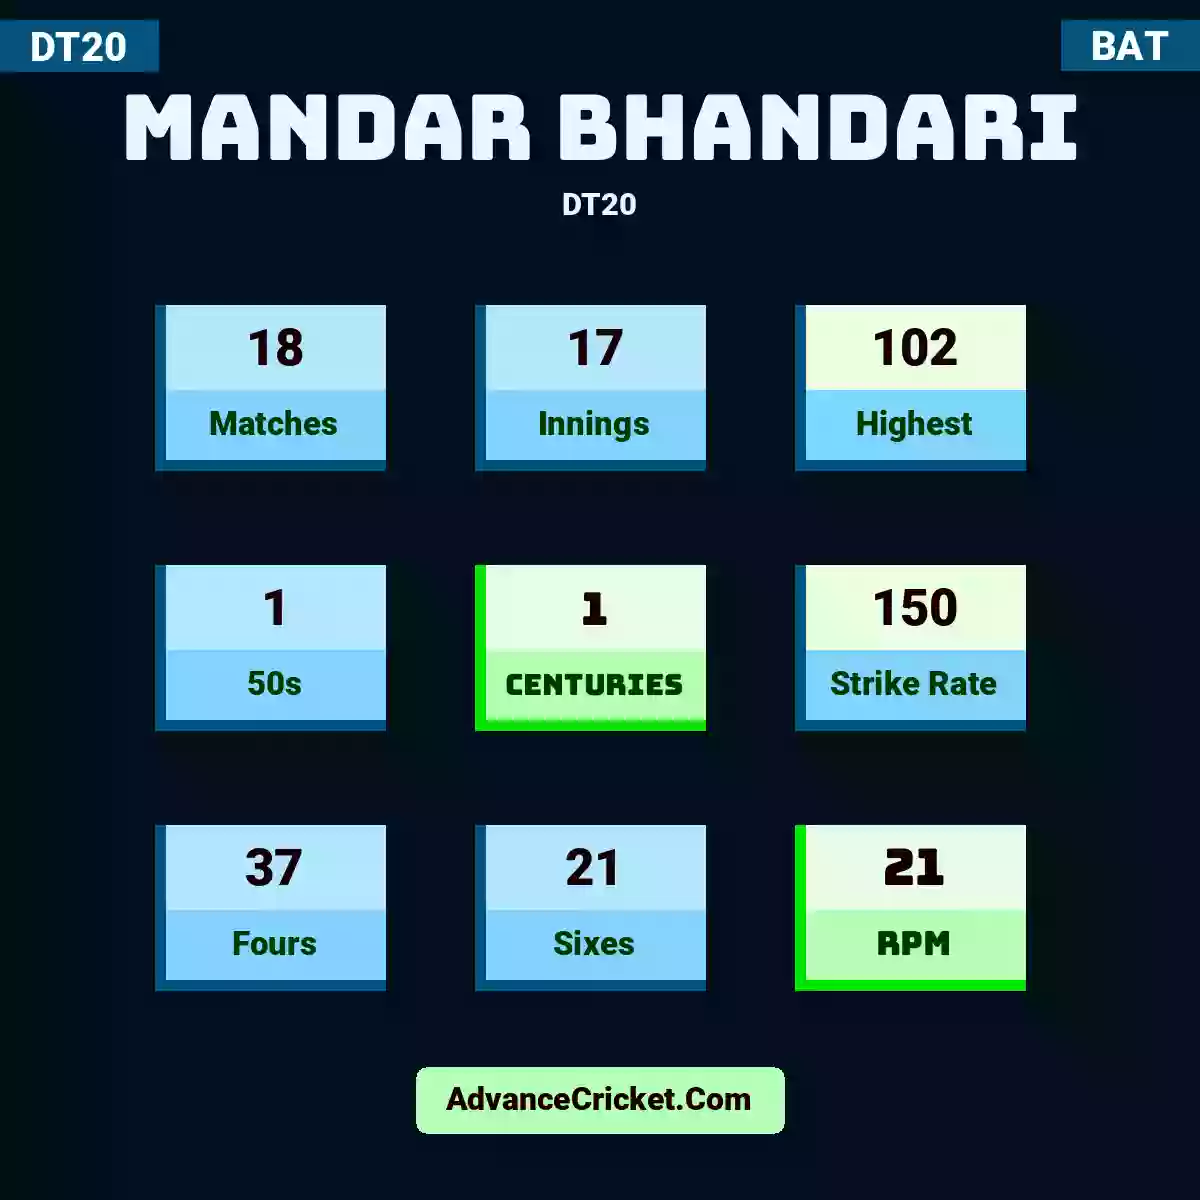 Mandar Bhandari DT20 , Mandar Bhandari played 5 matches, scored 74 runs as highest, 1 half-centuries, and 0 centuries, with a strike rate of 156. M.Bhandari hit 11 fours and 7 sixes, with an RPM of 26.